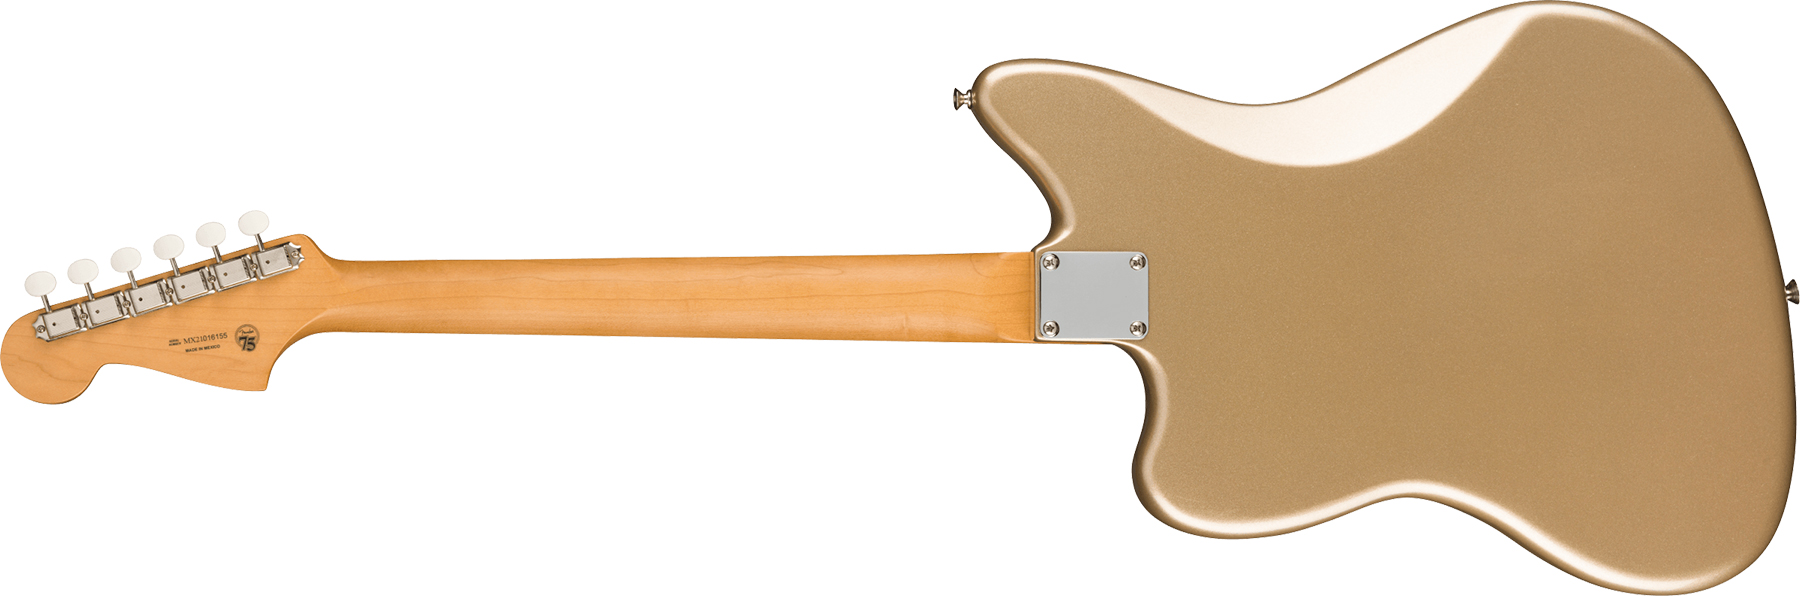 Fender Jazzmaster Gold Foil Ltd Mex 3mh Trem Bigsby Eb - Shoreline Gold - Retro rock electric guitar - Variation 1